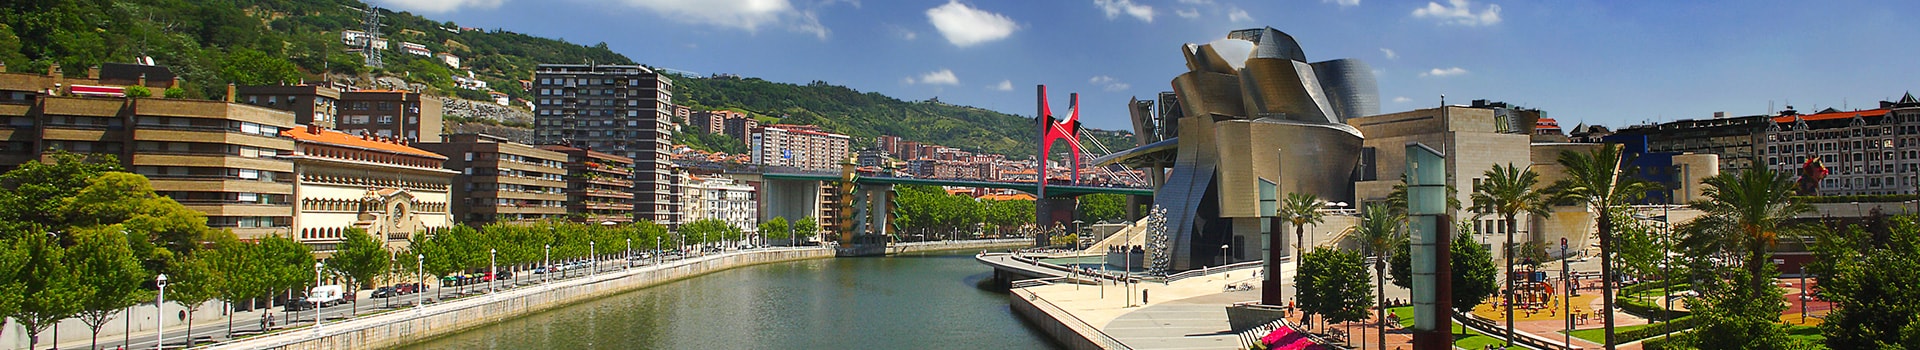 Malaga - Bilbao